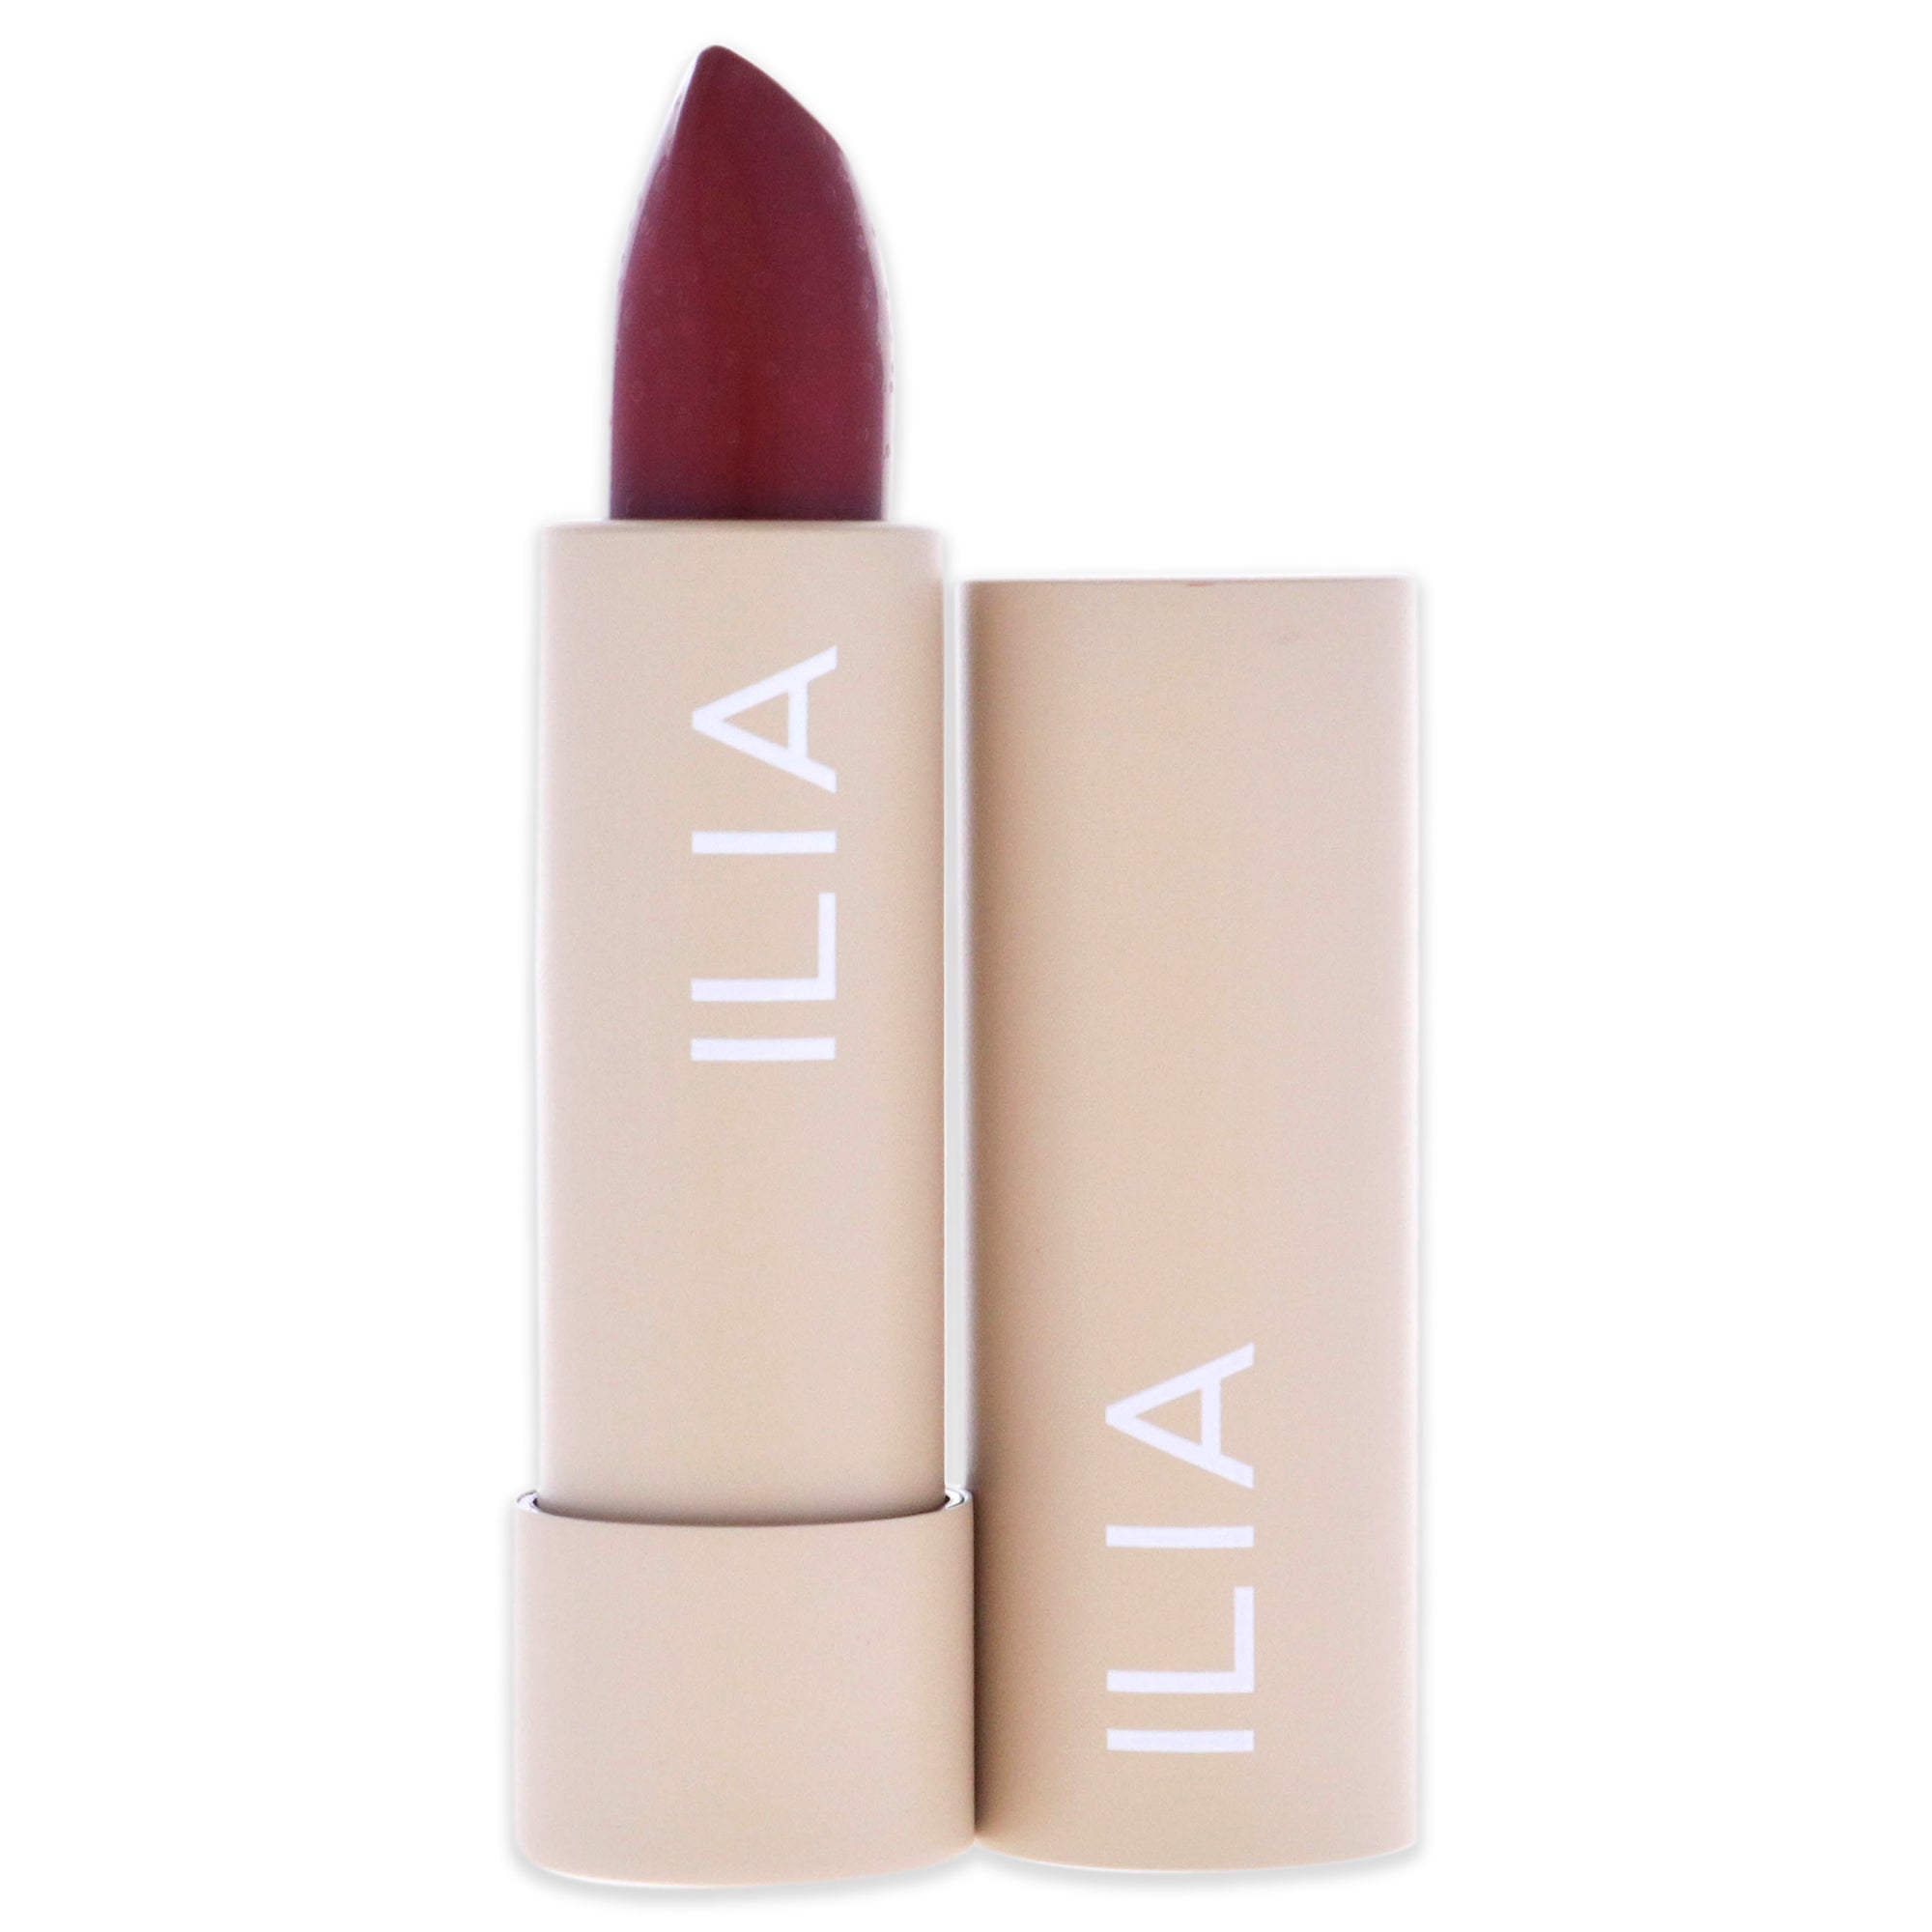 Color Block Lipstick - Rumba by ILIA Beauty for Women - 0.14 oz Lipstick